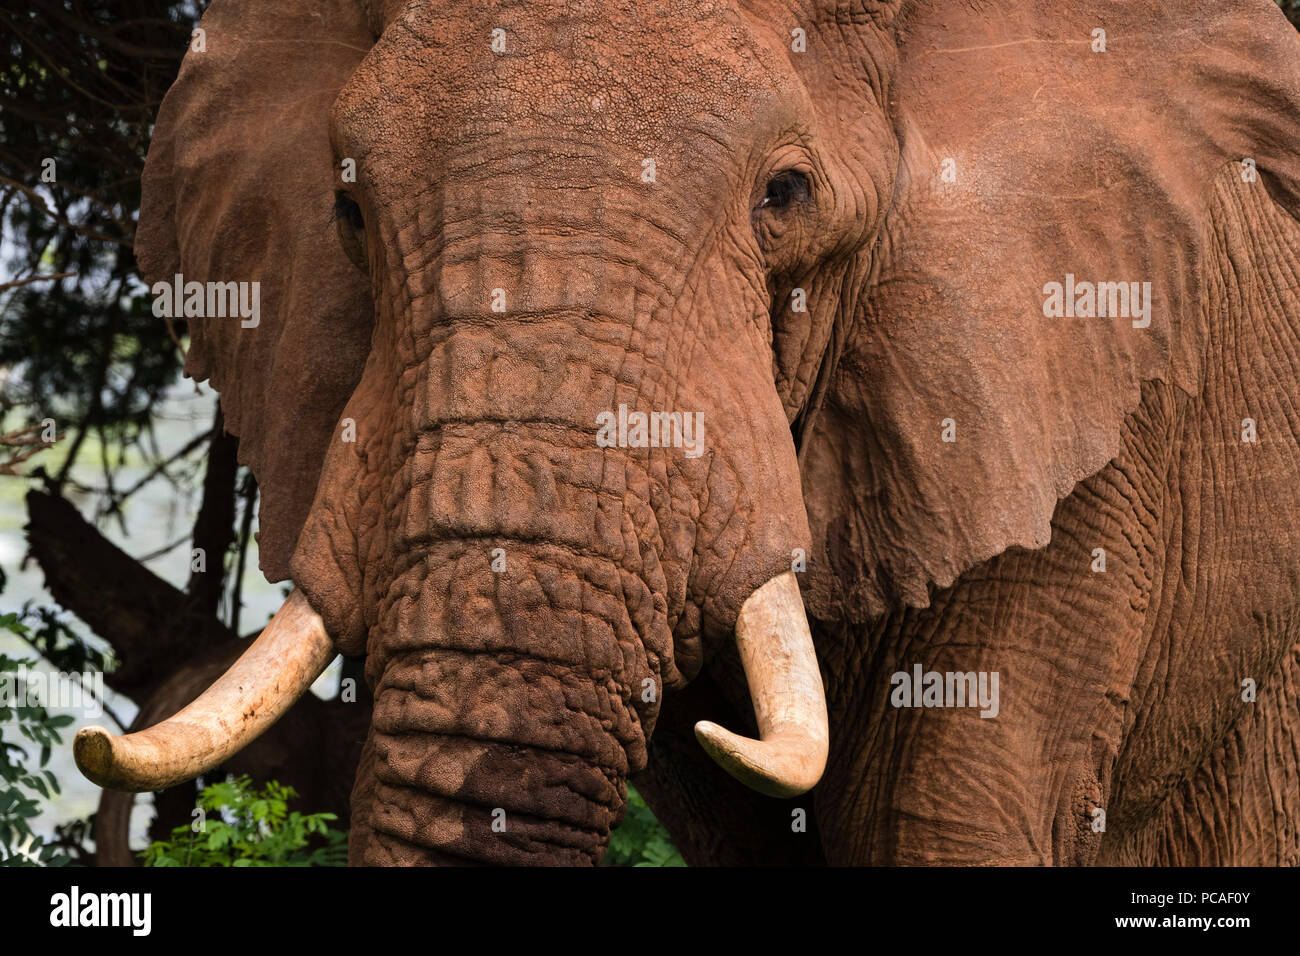 Close up portrait of an African elephant (Loxodonta africana), Tsavo, Kenya, East Africa, Africa Stock Photo